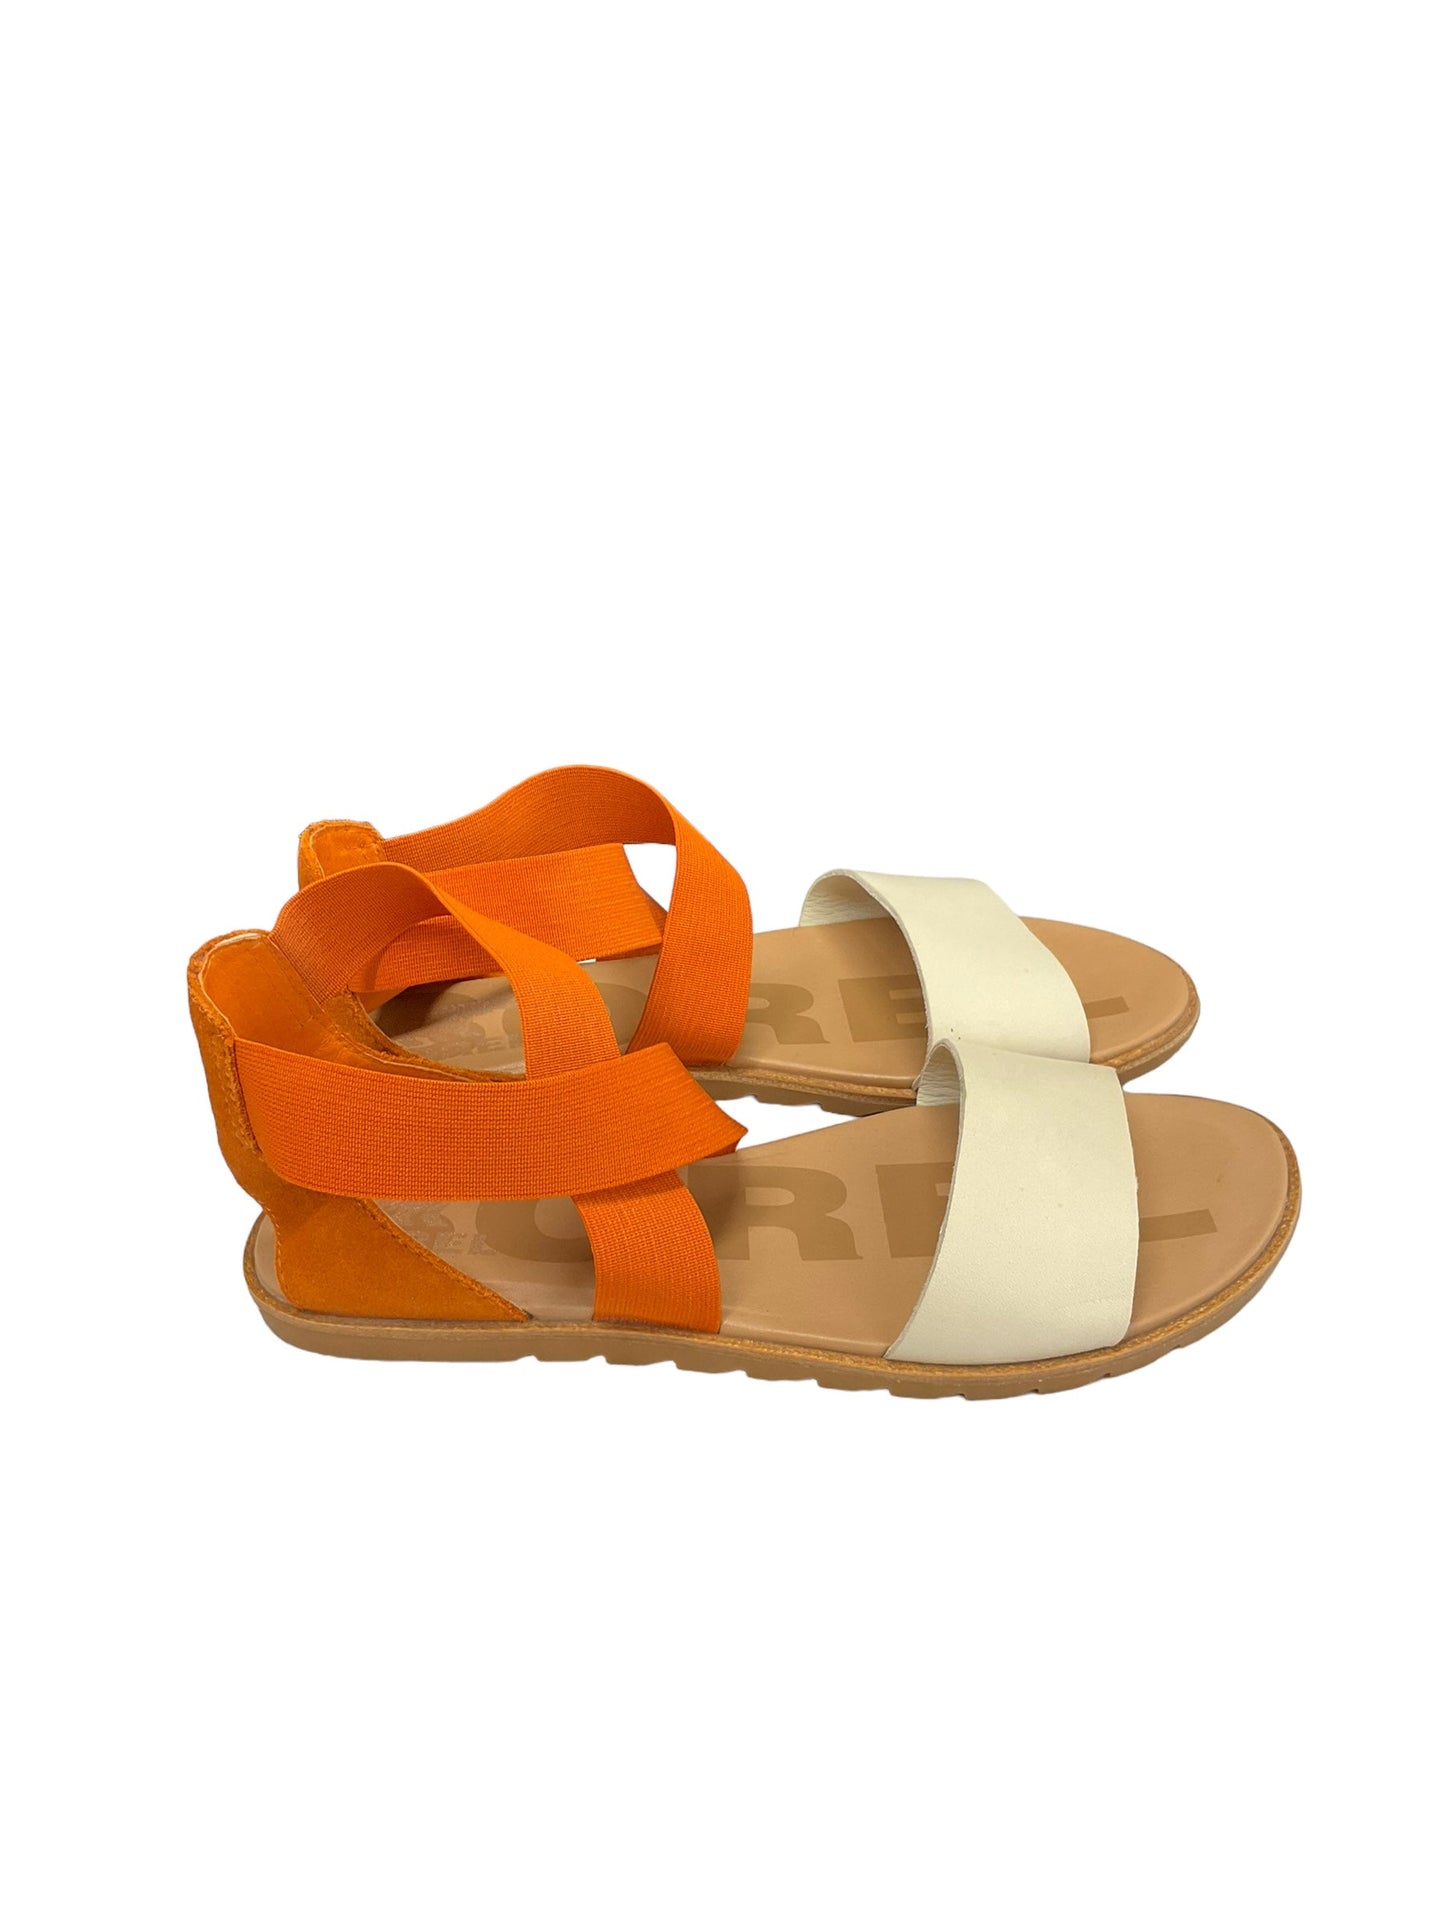 Orange & White Sandals Flats Sorel, Size 8